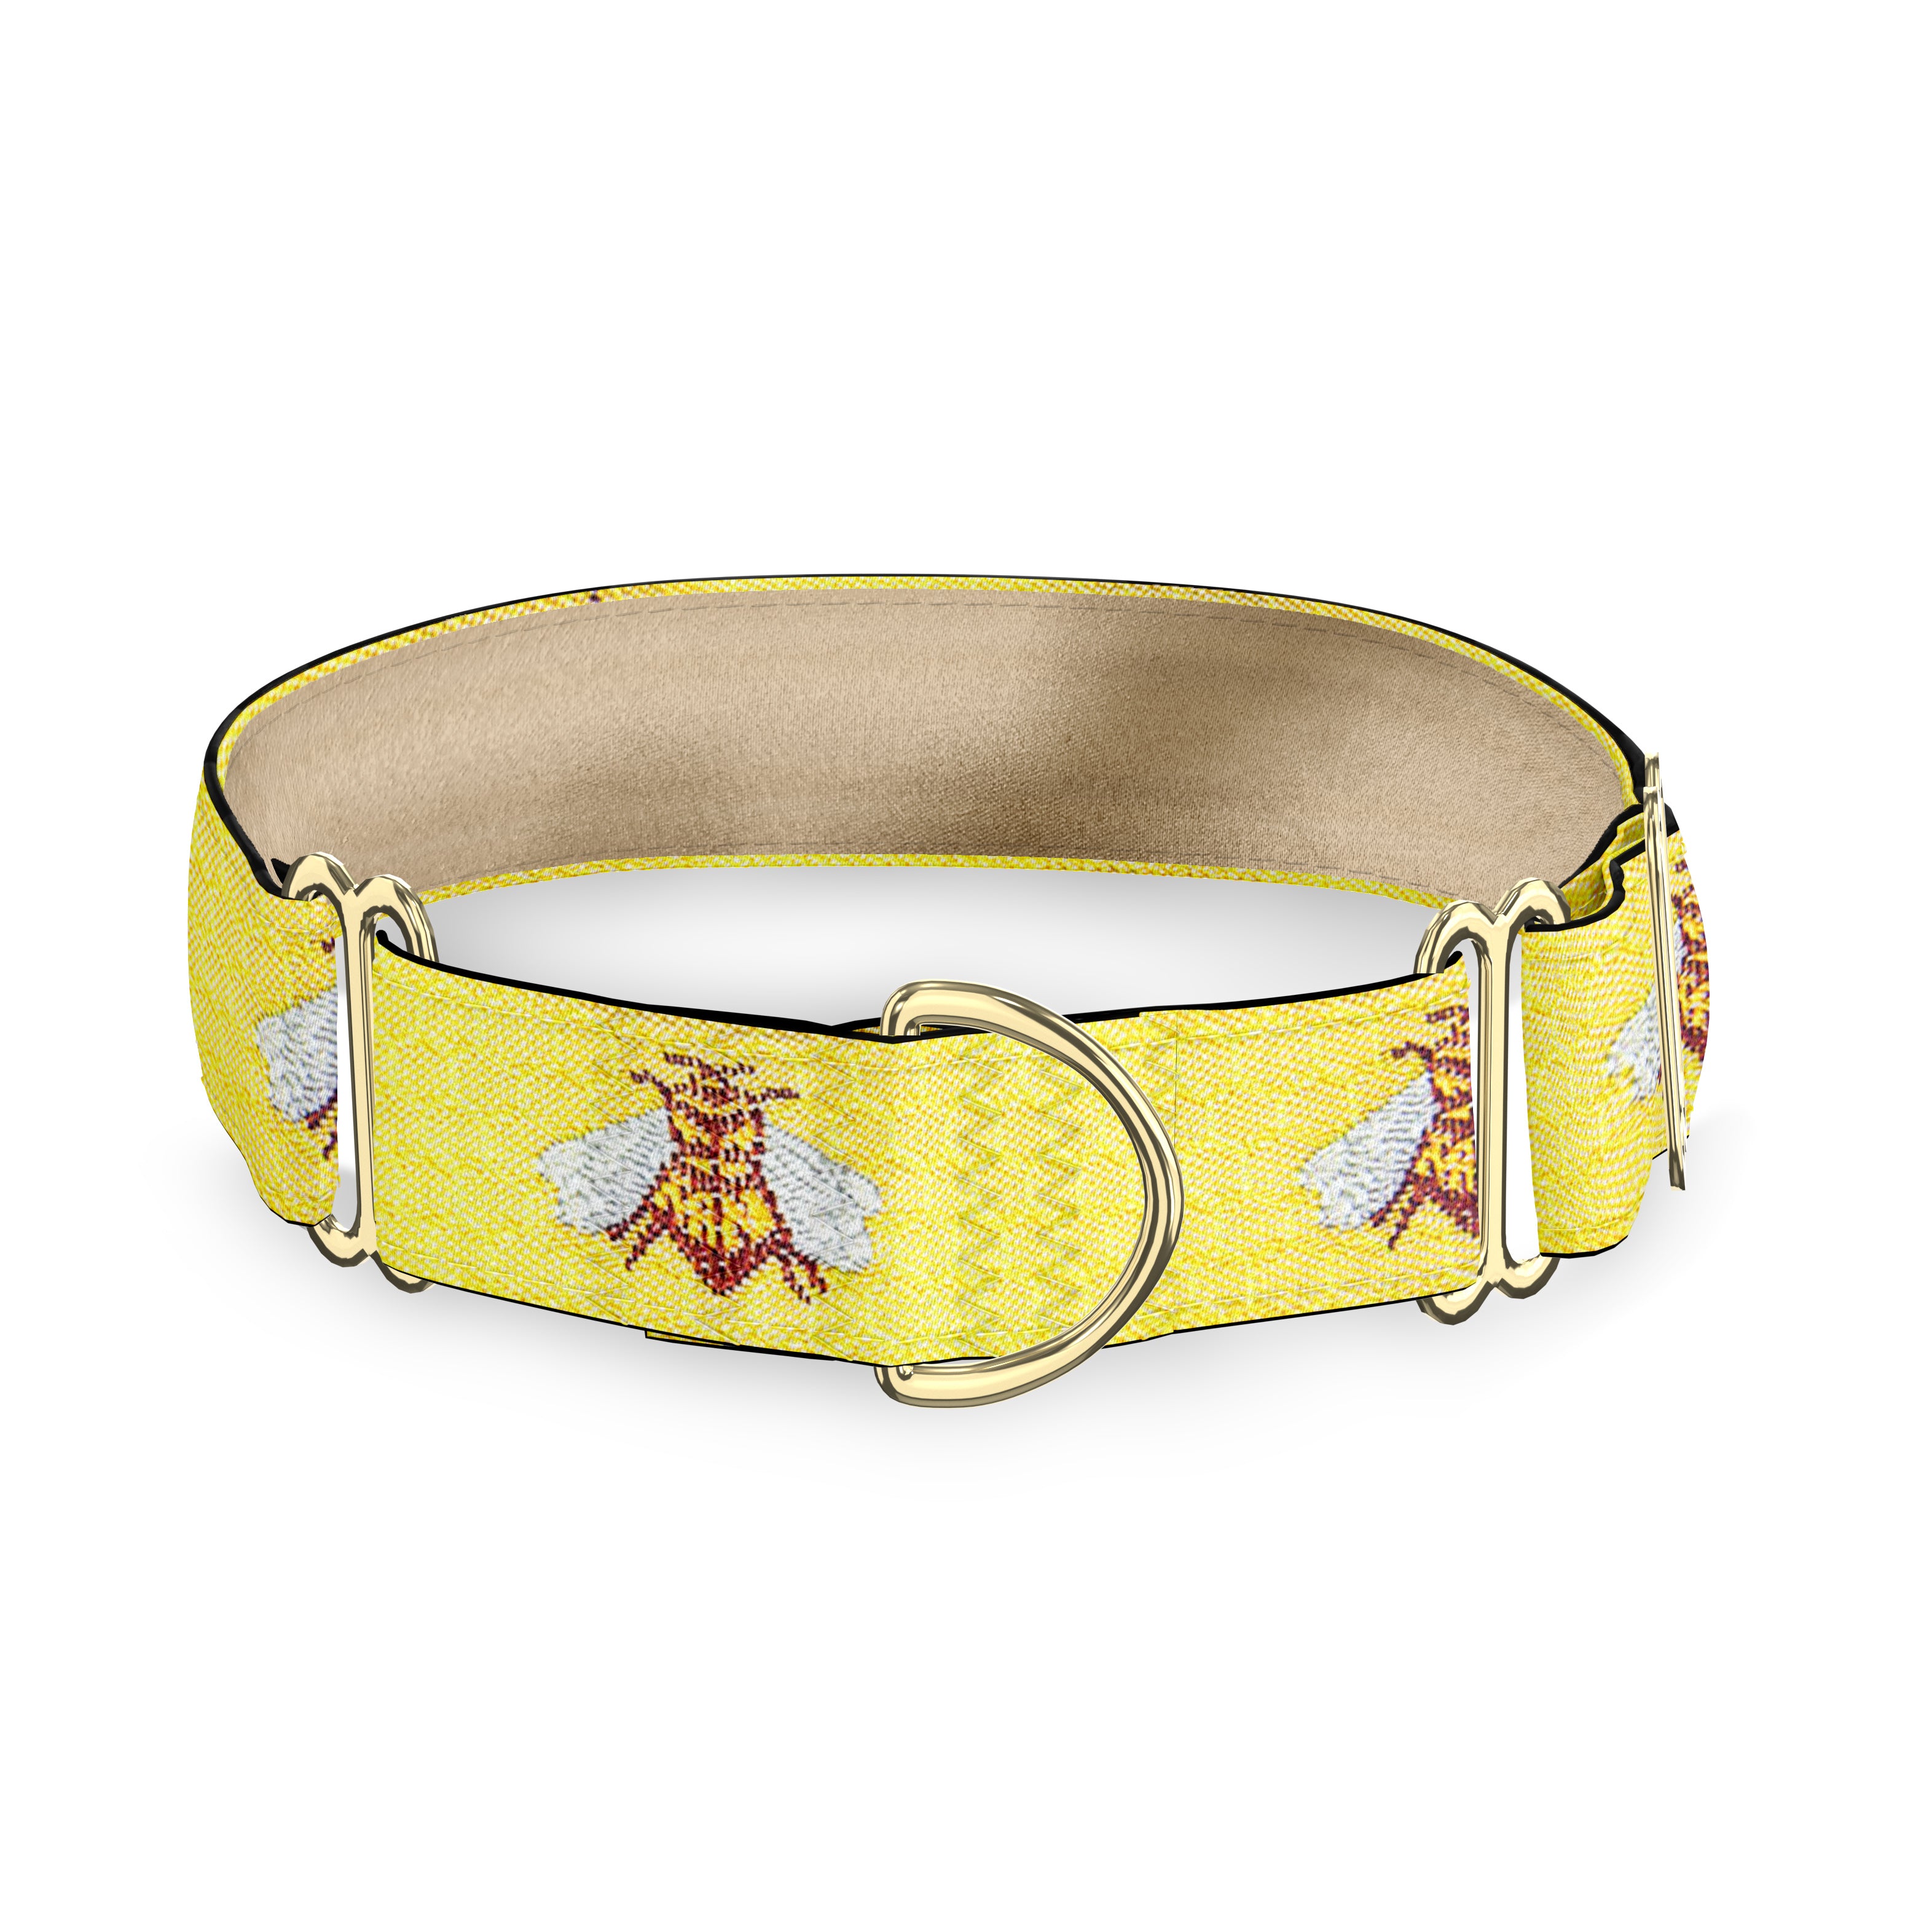 Louis Vuitton Dog Harness and Leash - Royal Dog Collars - Handmade